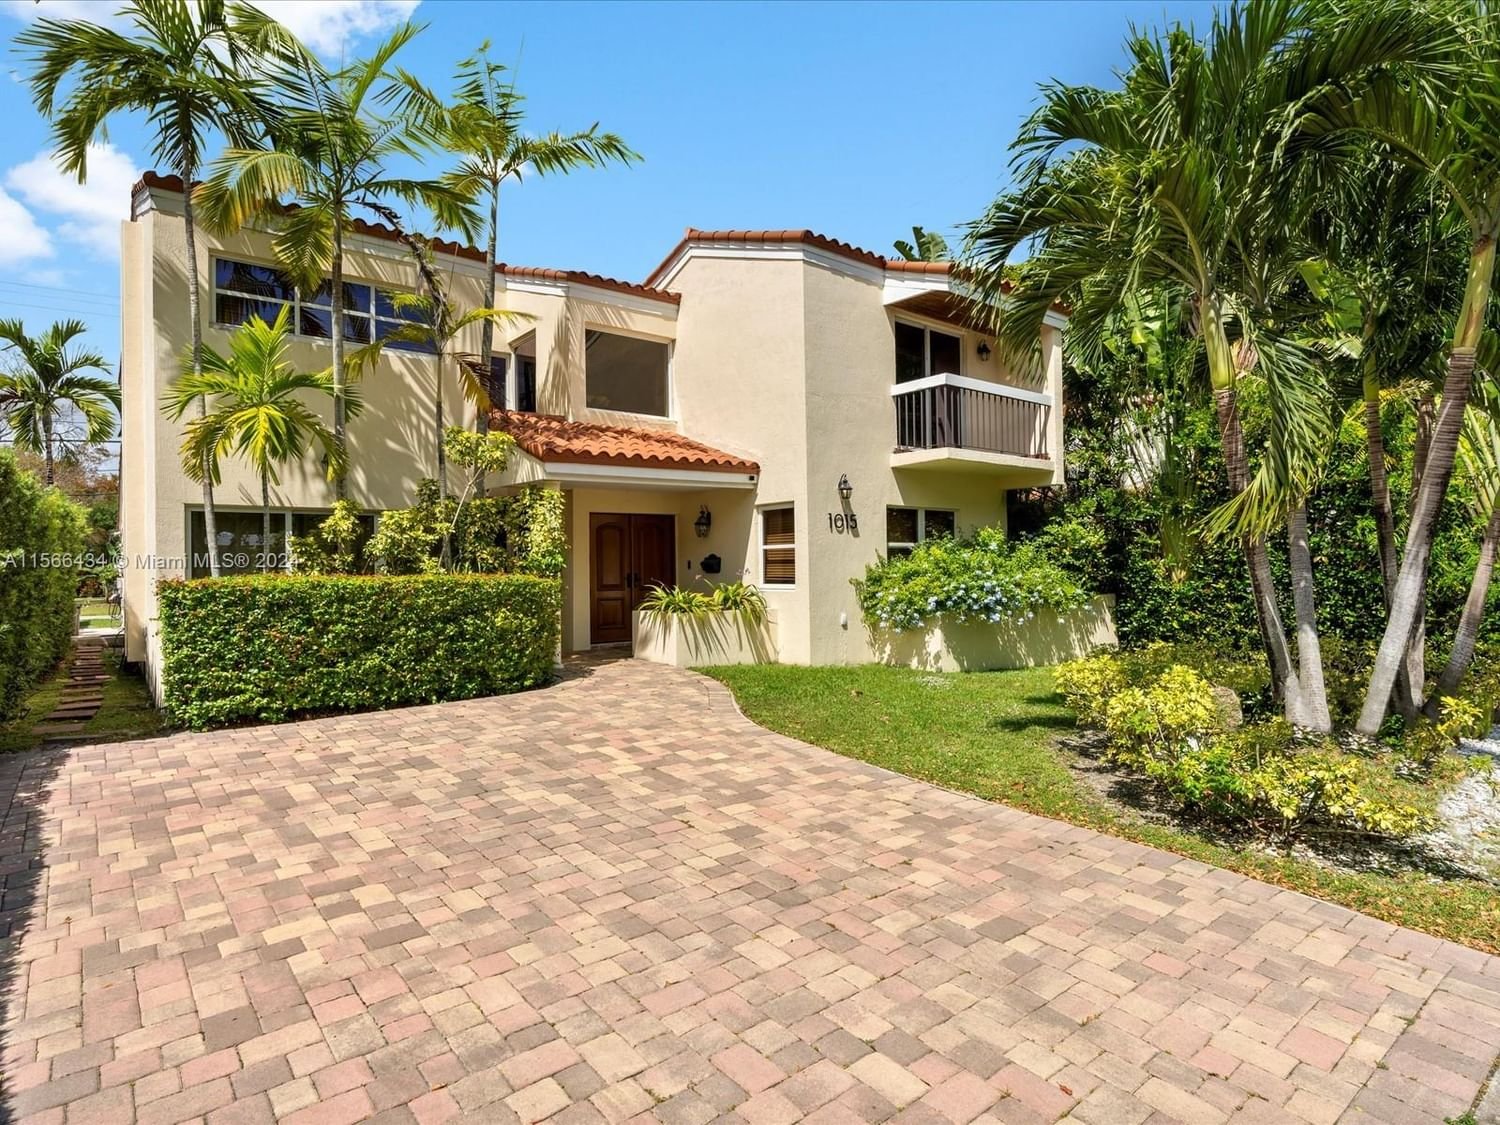 Real estate property located at 1015 Venetia Ave, Miami-Dade County, C GAB GRANADA SEC, Coral Gables, FL